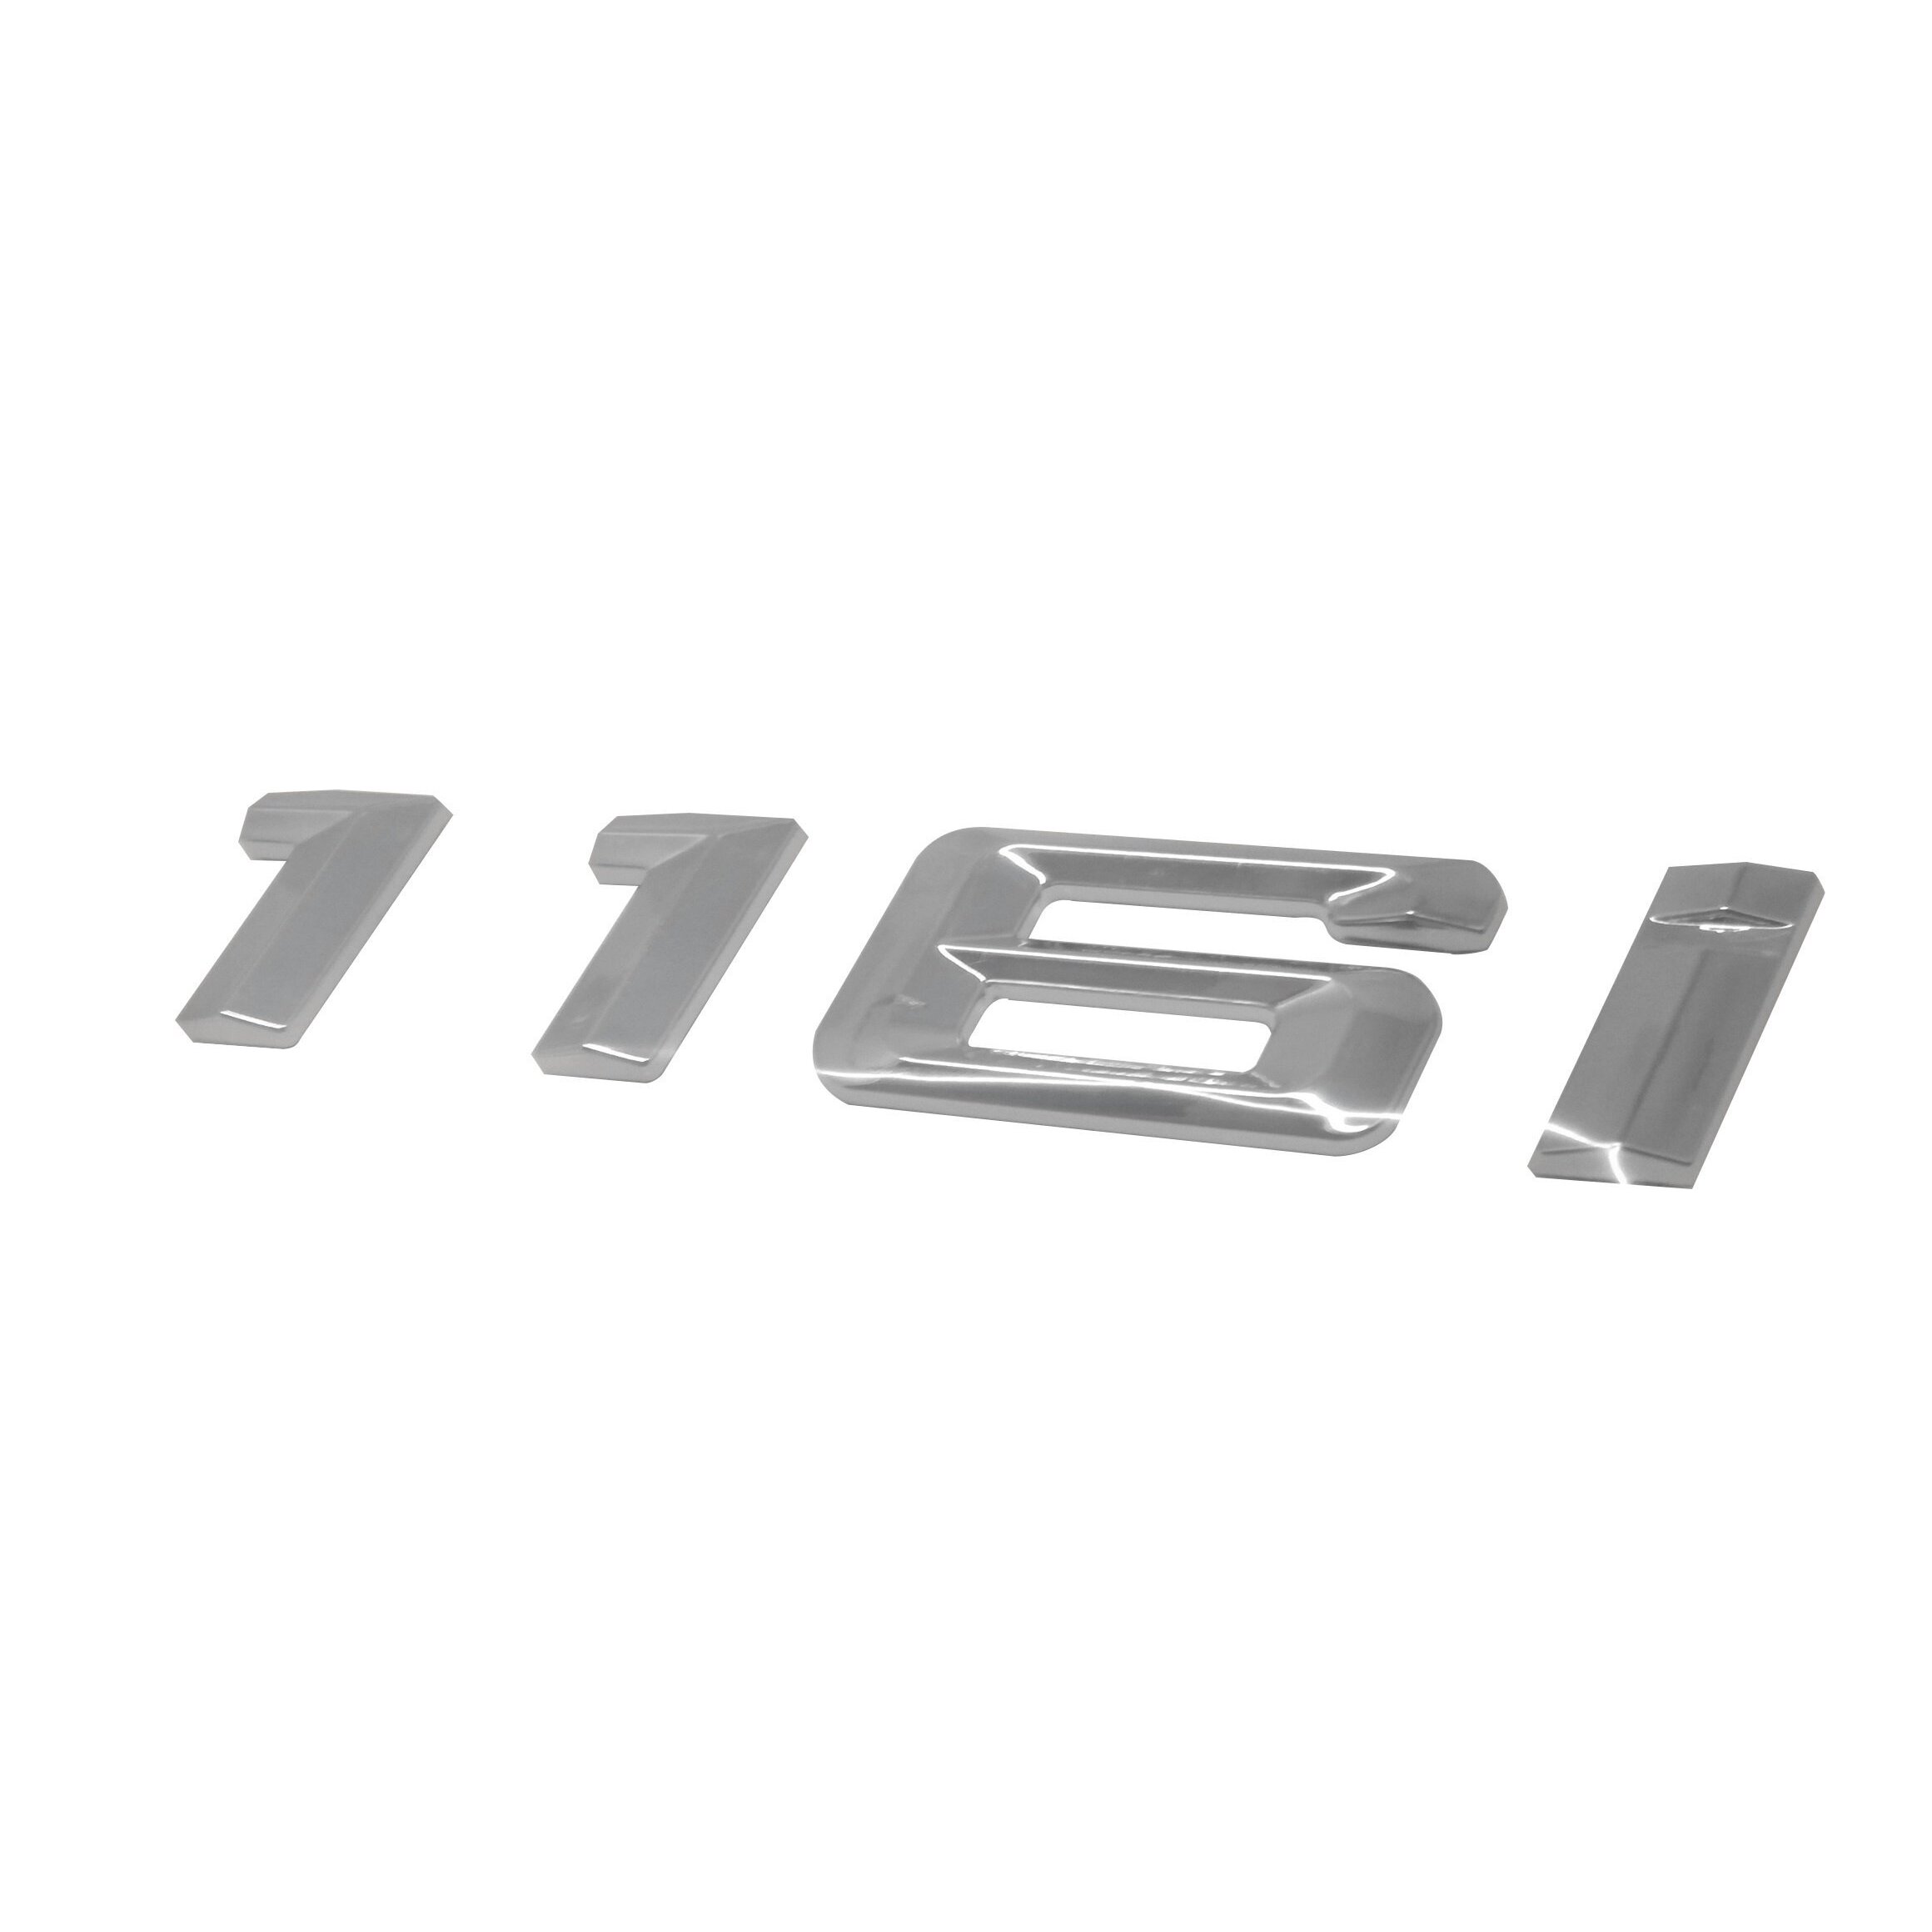 BMW E81 Trunk Lid Chrome 316i Emblem Badge Logo Sign 7135547 51147135547 NEW